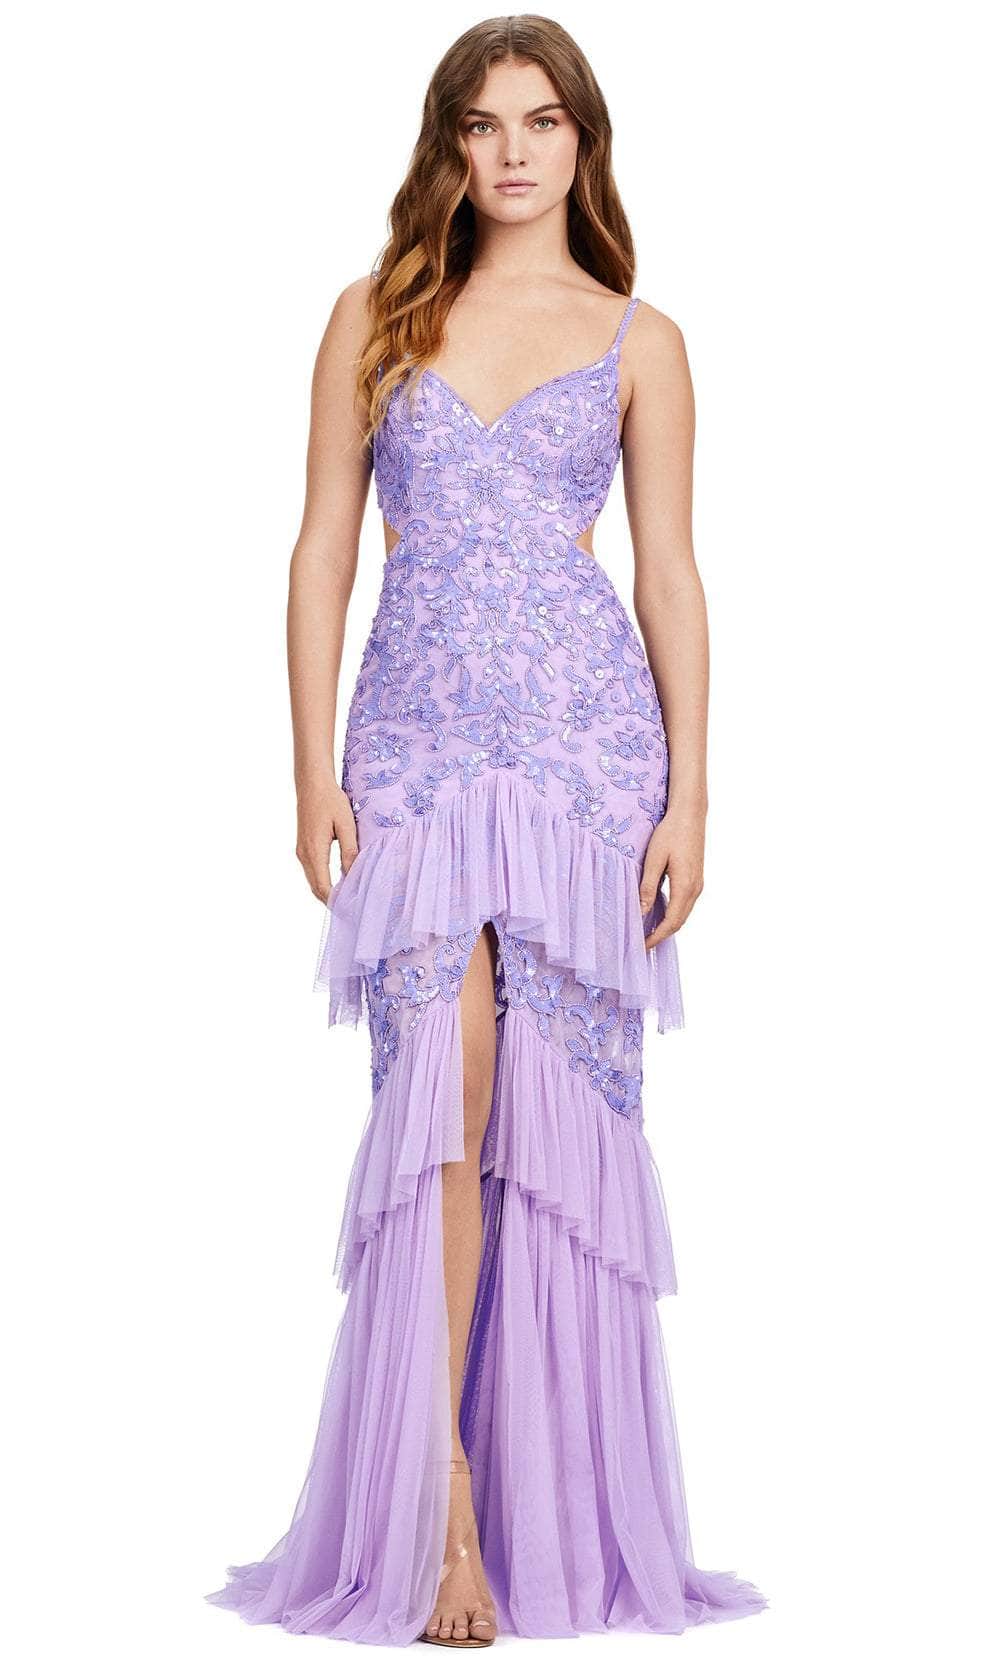 Ashley Lauren 11437 - Ruffle Ornate Prom Dress 00 /  Lilac